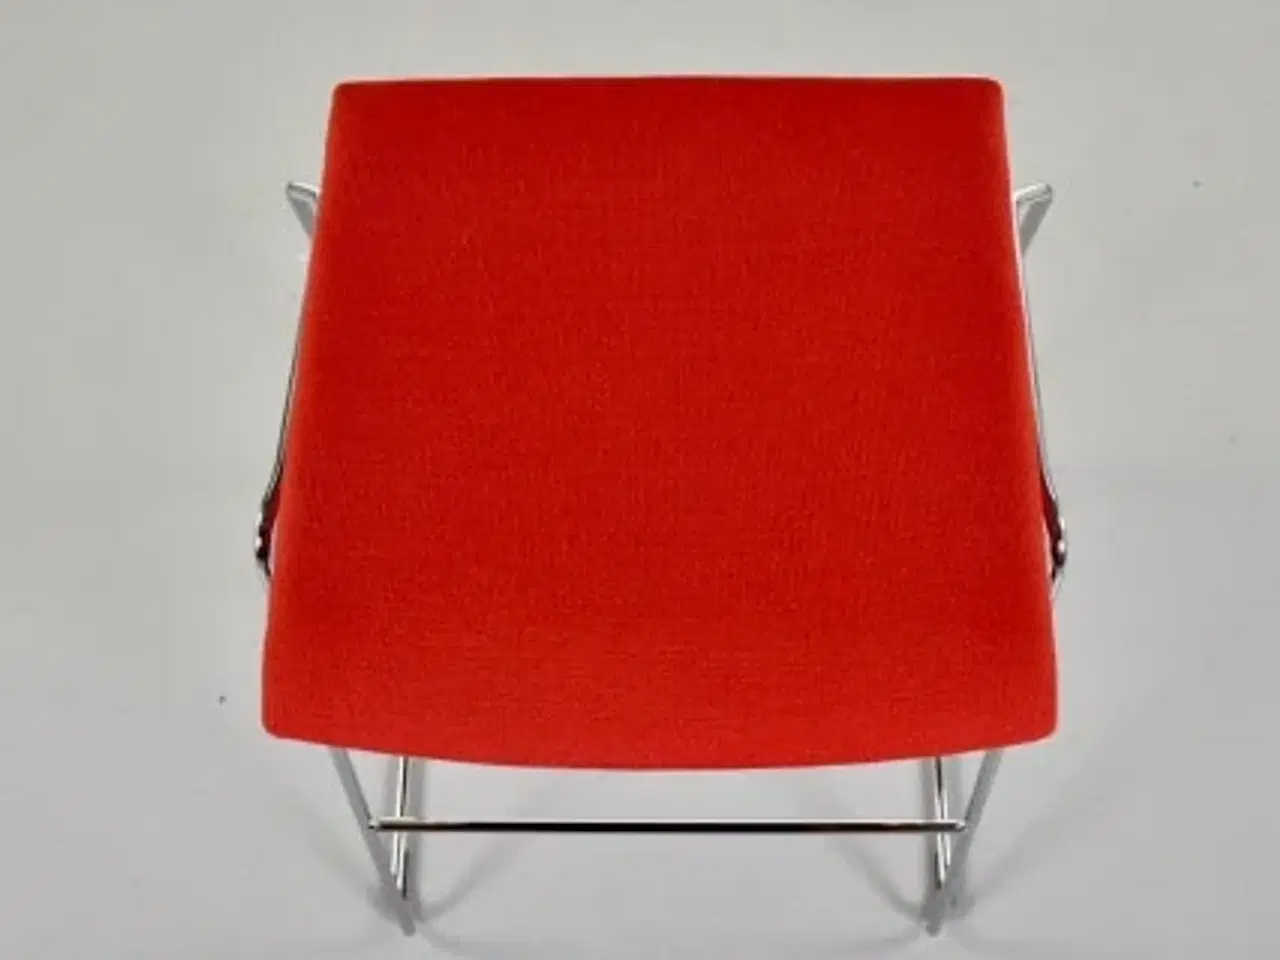 Billede 5 - Savir gate barstol med rødt polster på sædet og på krom stel